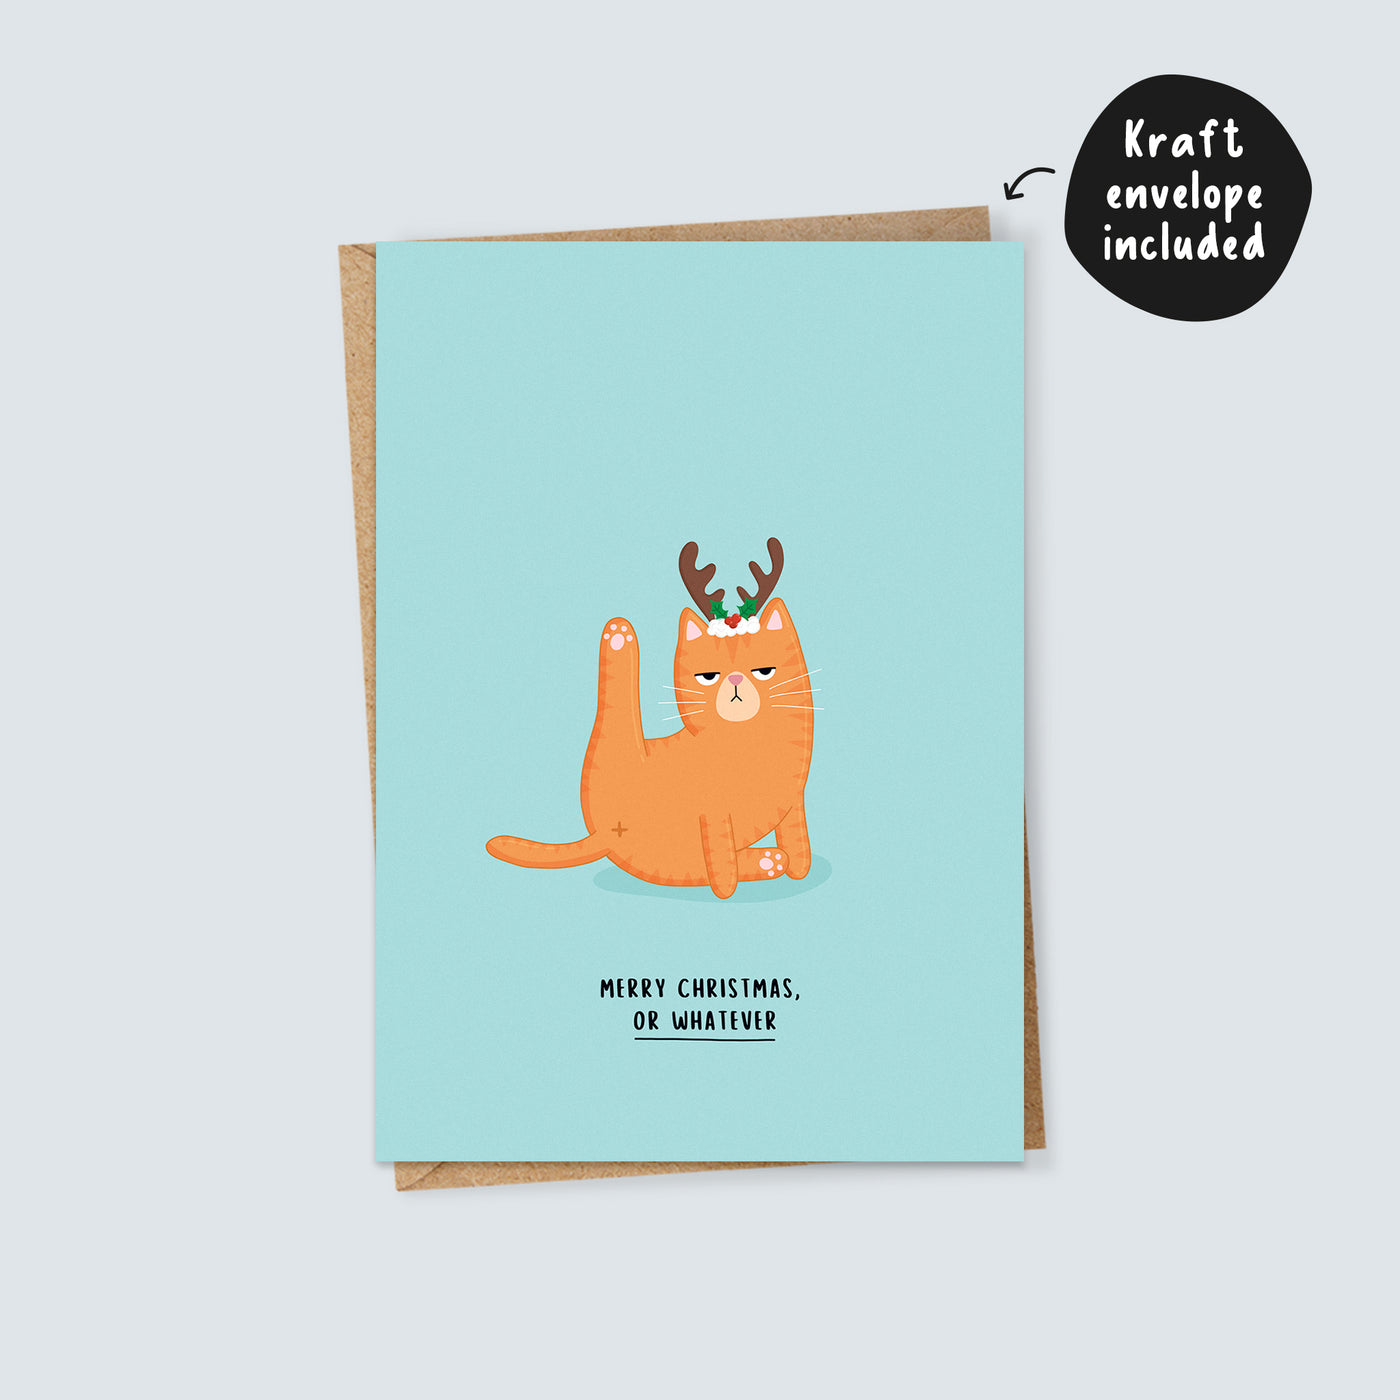 Grumpy Cats Christmas Card Multi-Pack